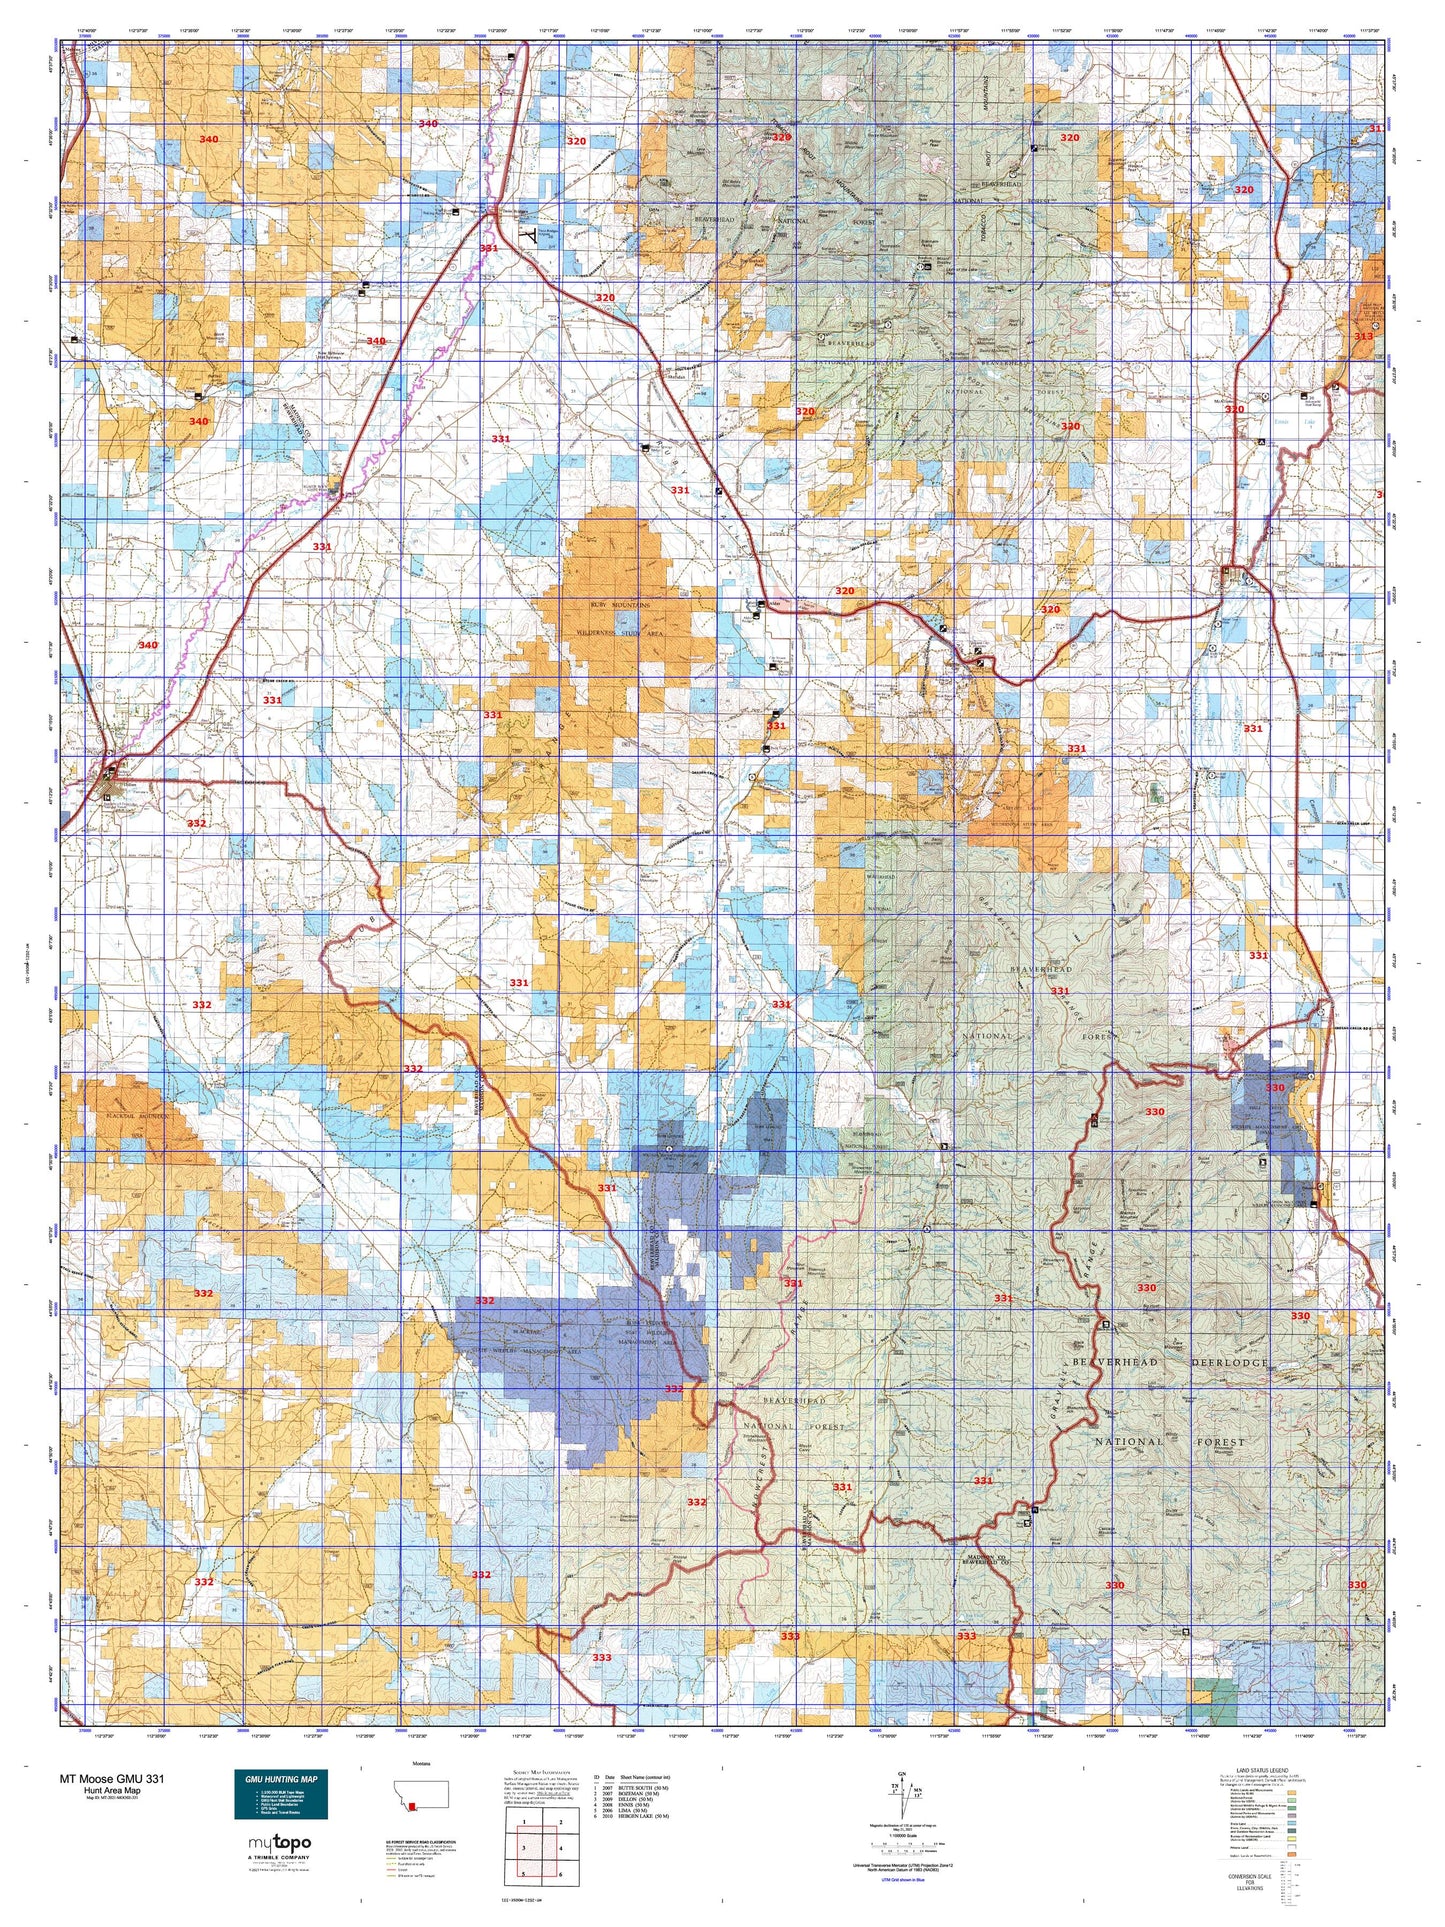 Montana Moose GMU 331 Map Image